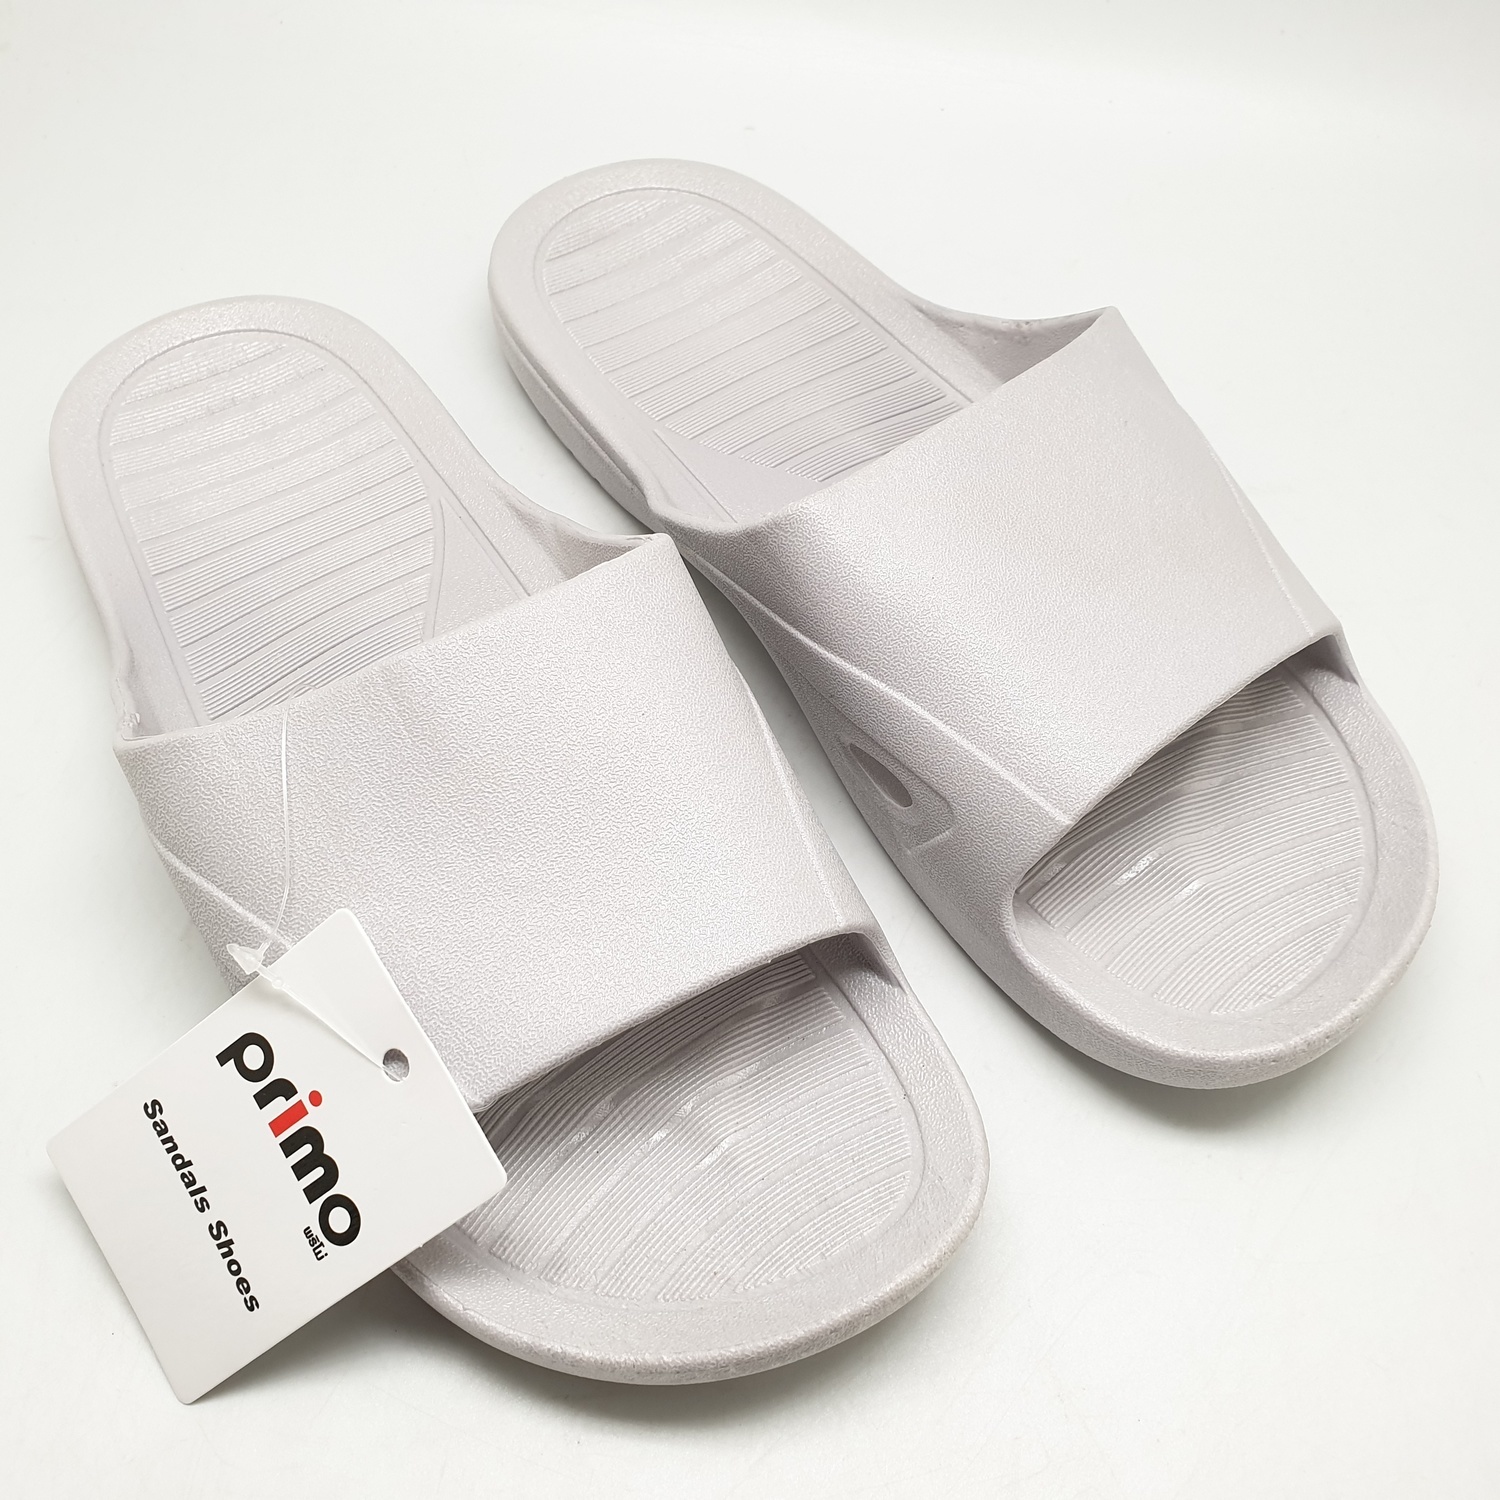 Primo รองเท้าแตะแบบสวม LY-T1820-42WH  สีขาว